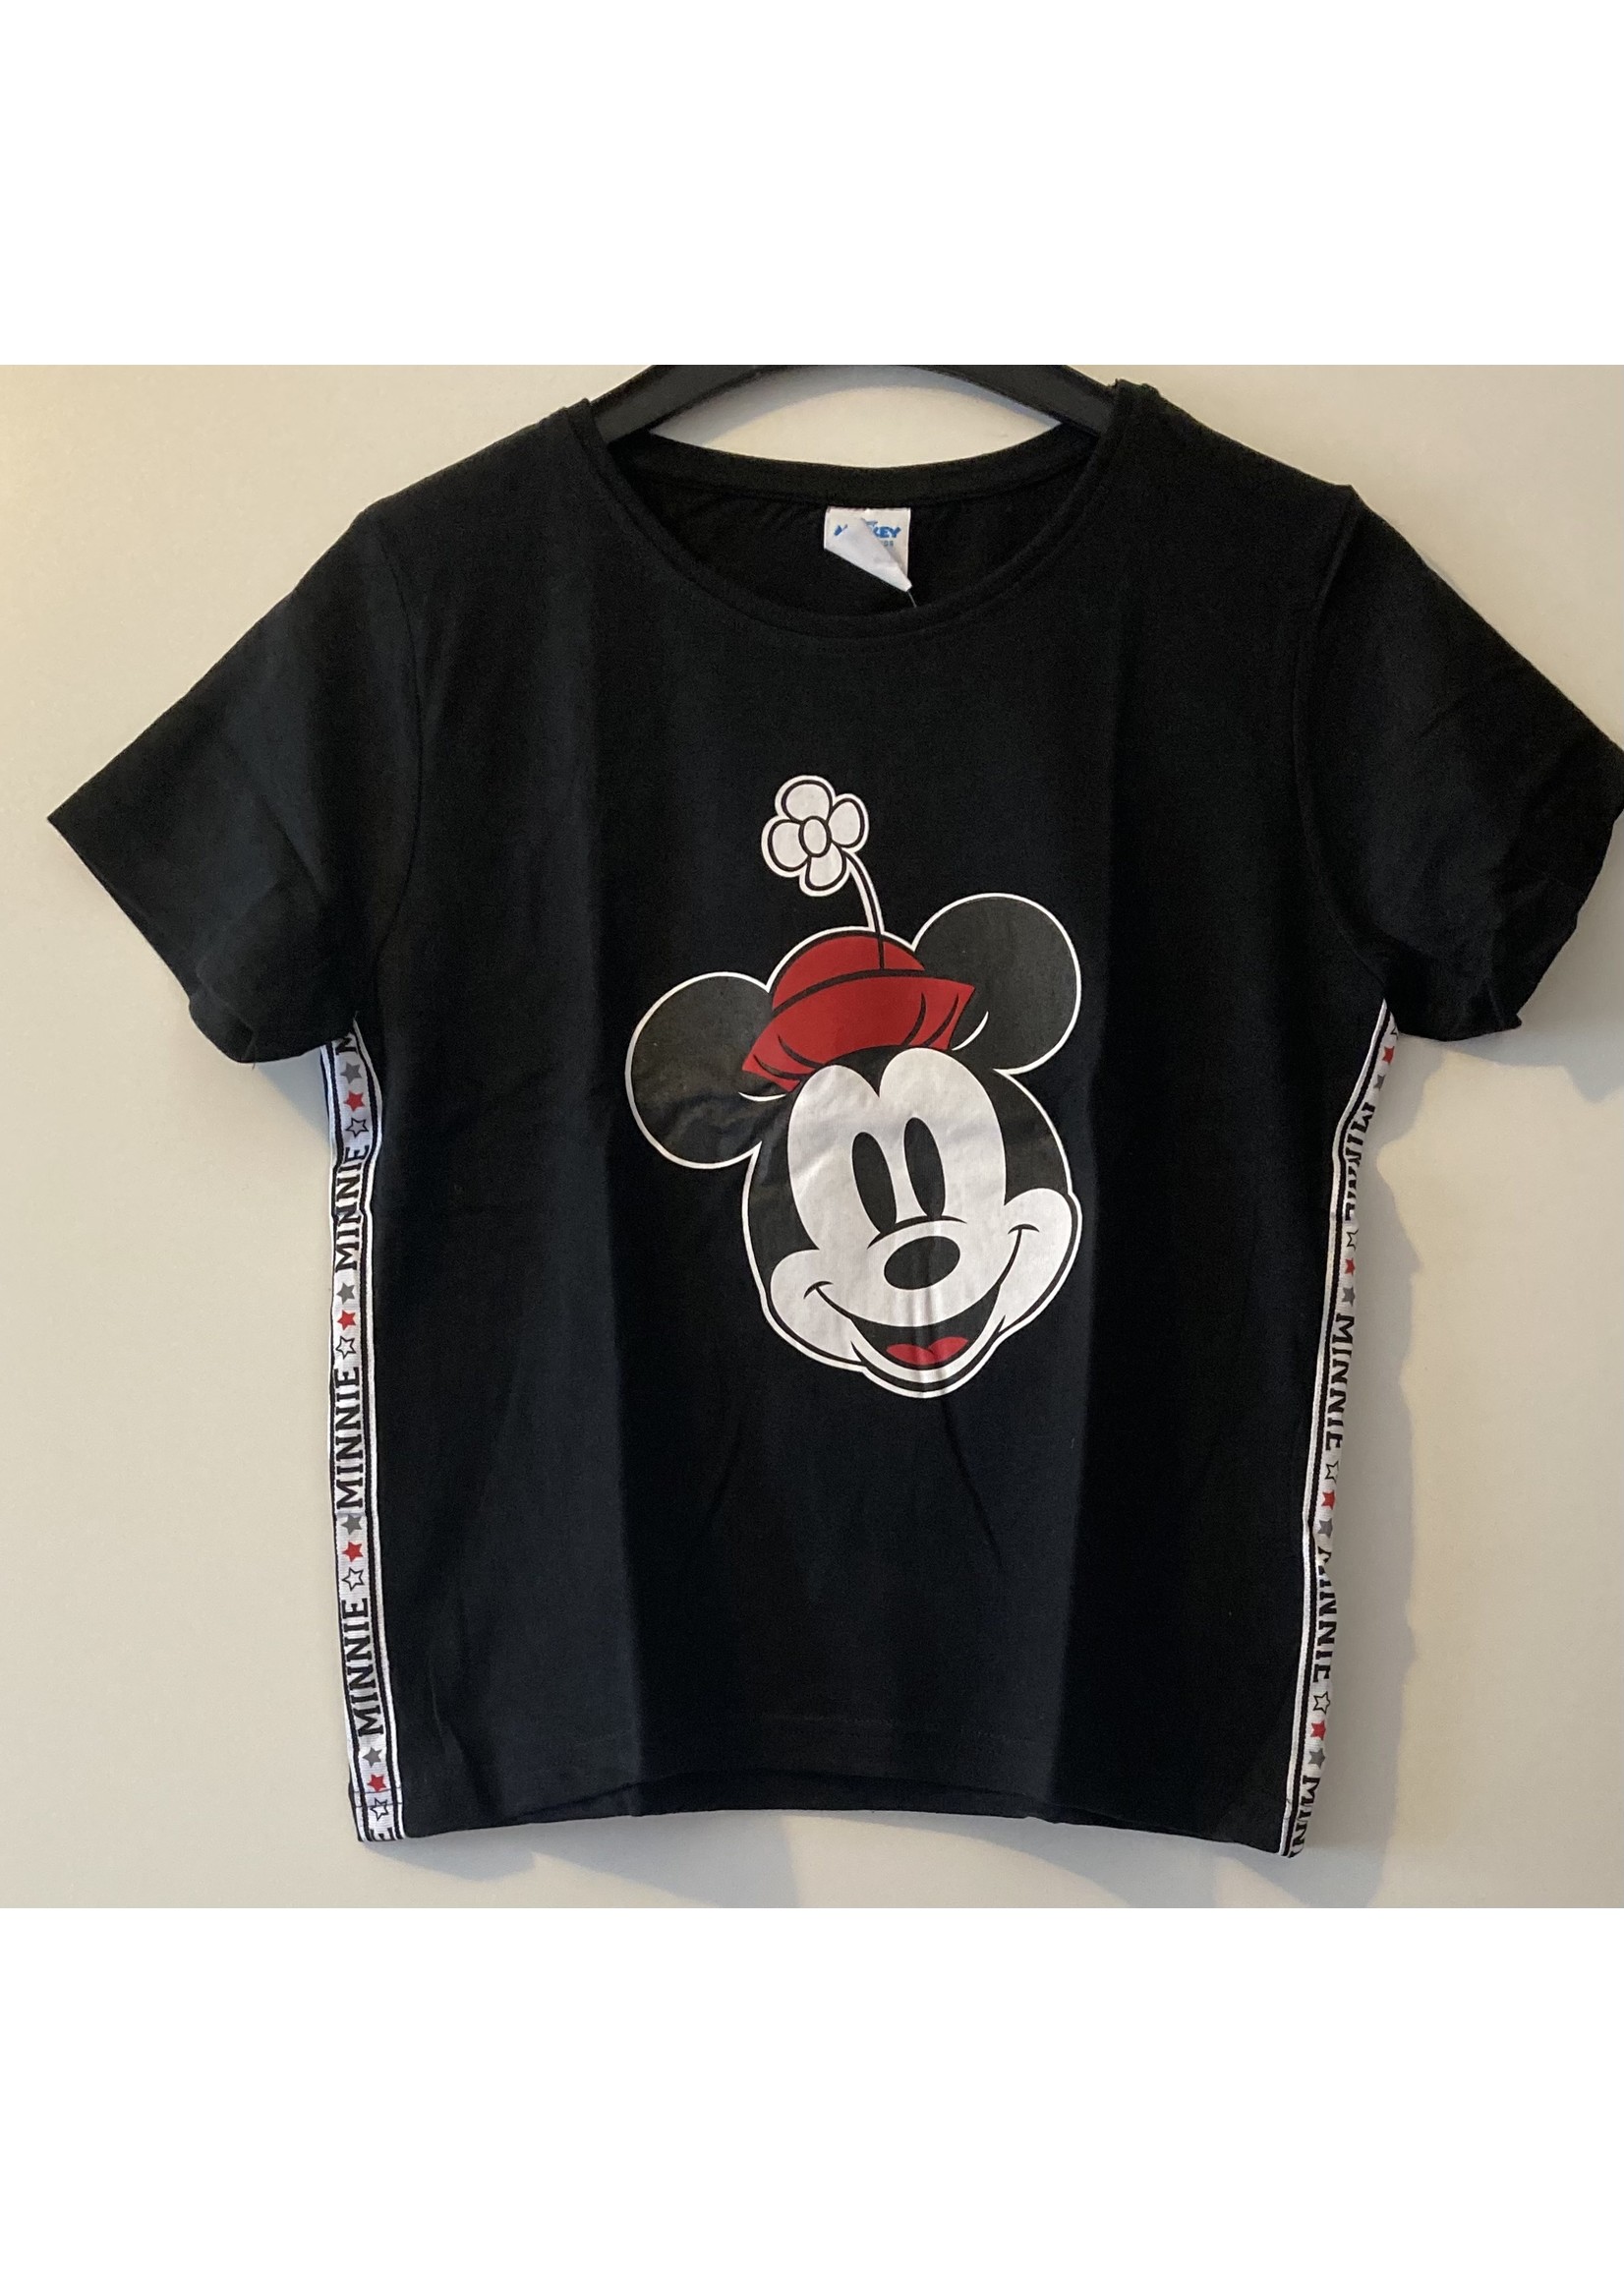 Disney Mickey Mouse T-shirt from Disney black